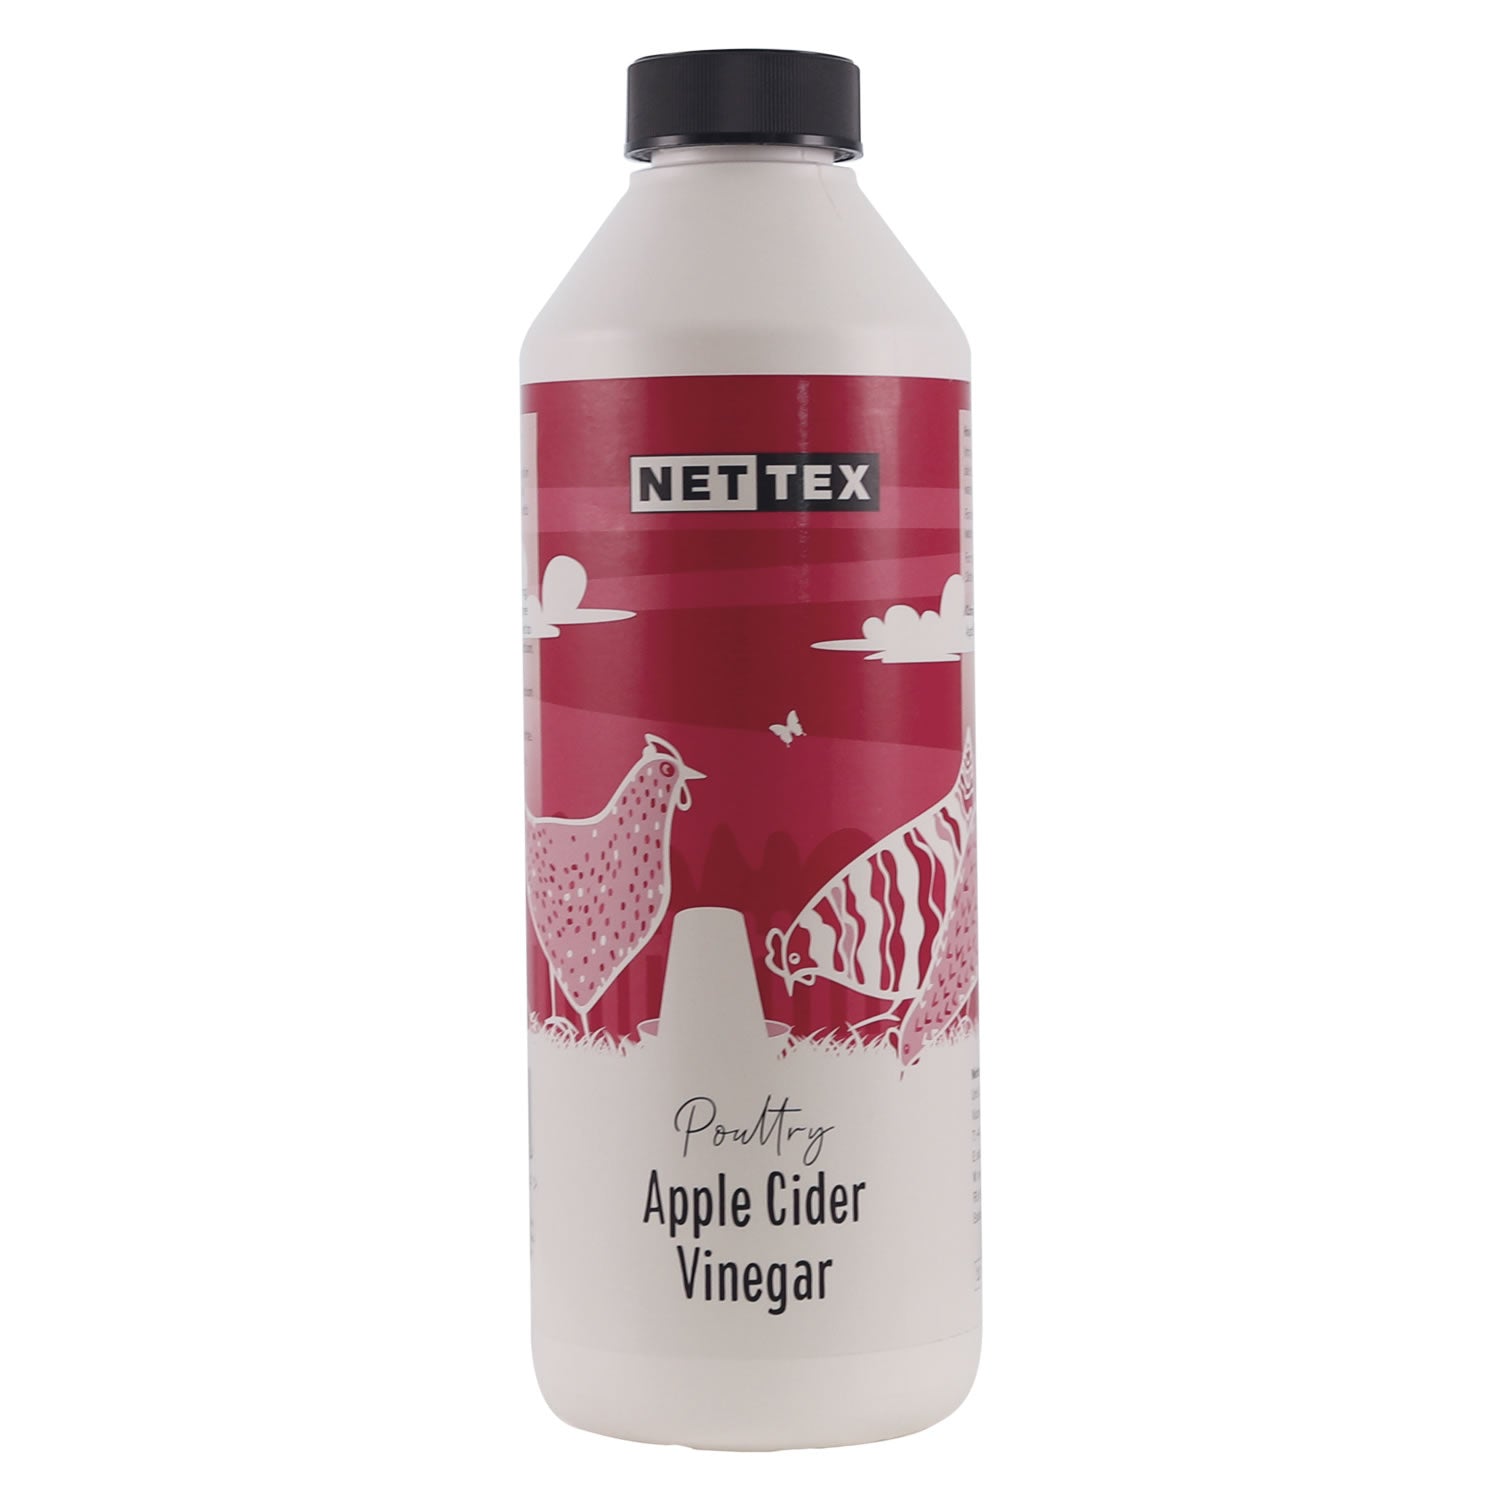 Nettex Poultry Apple Cider Vinegar- 1L